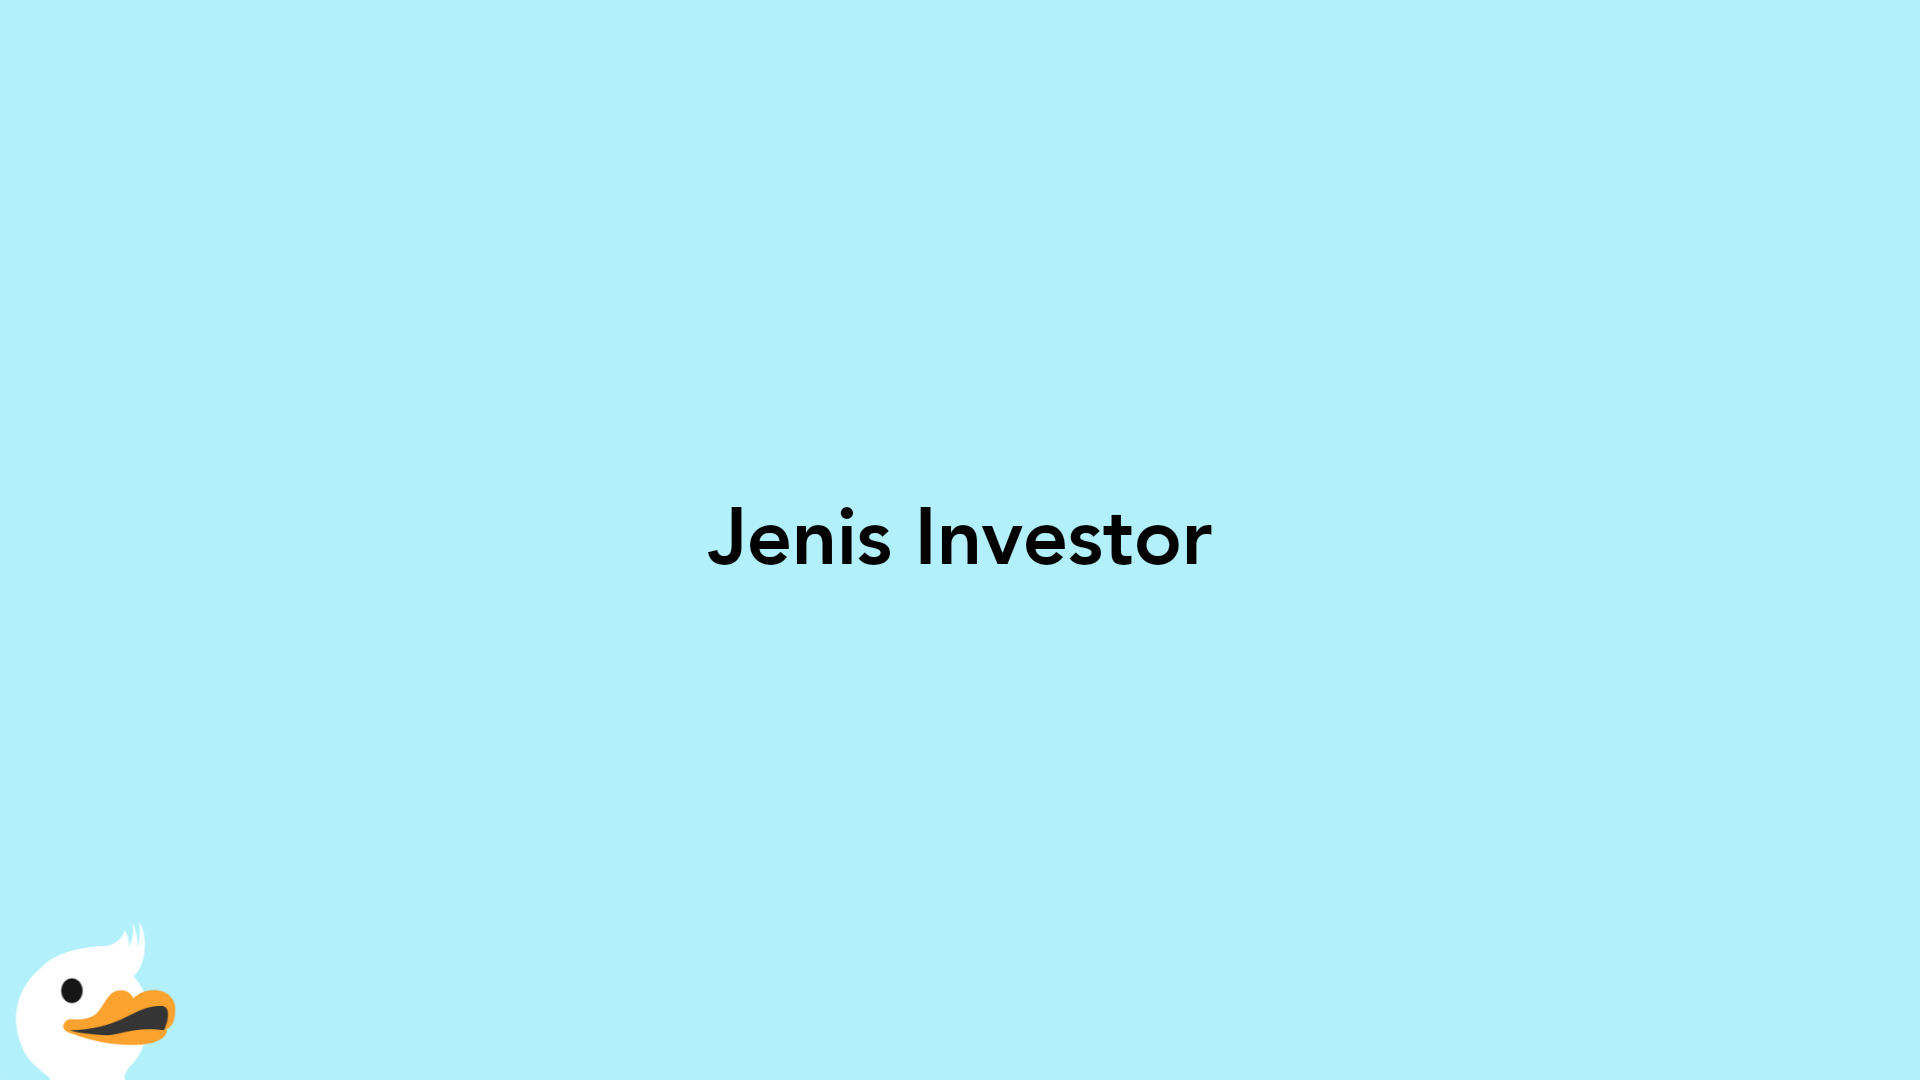 Jenis Investor